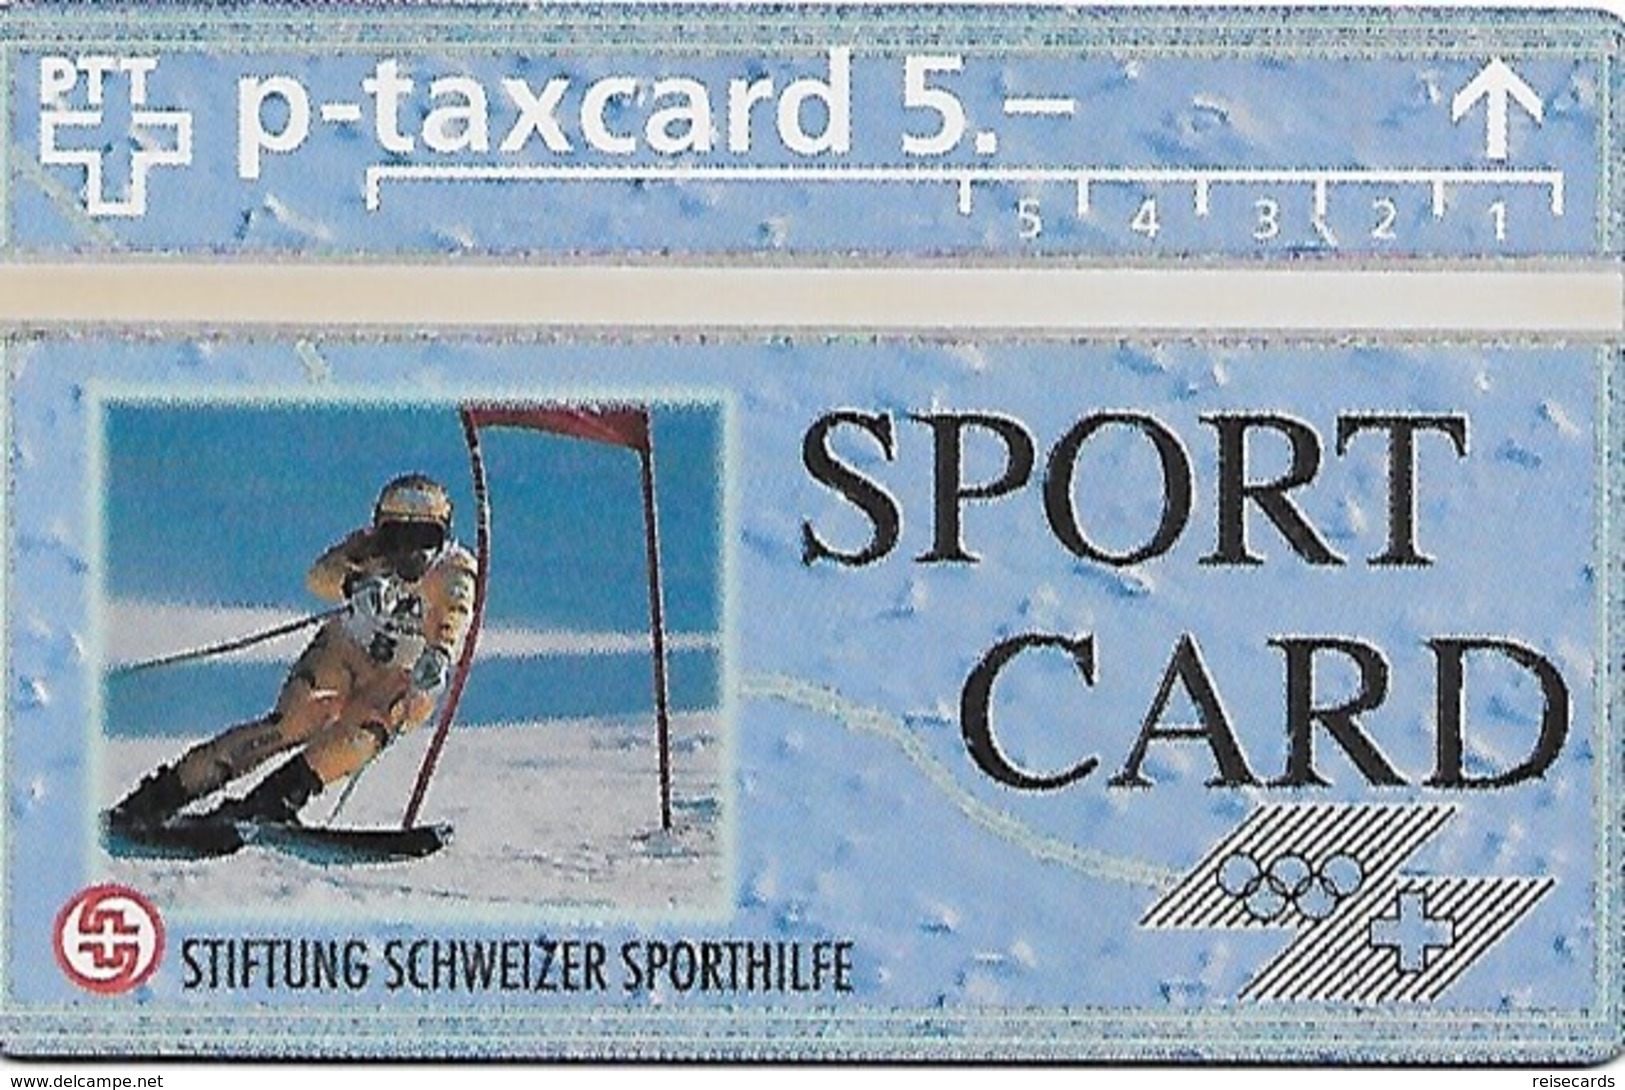 PTT-p: KP-93/56F 403L Stiftung Schweizer Sporthilfe - Sportcard Ski Alpin - Schweiz